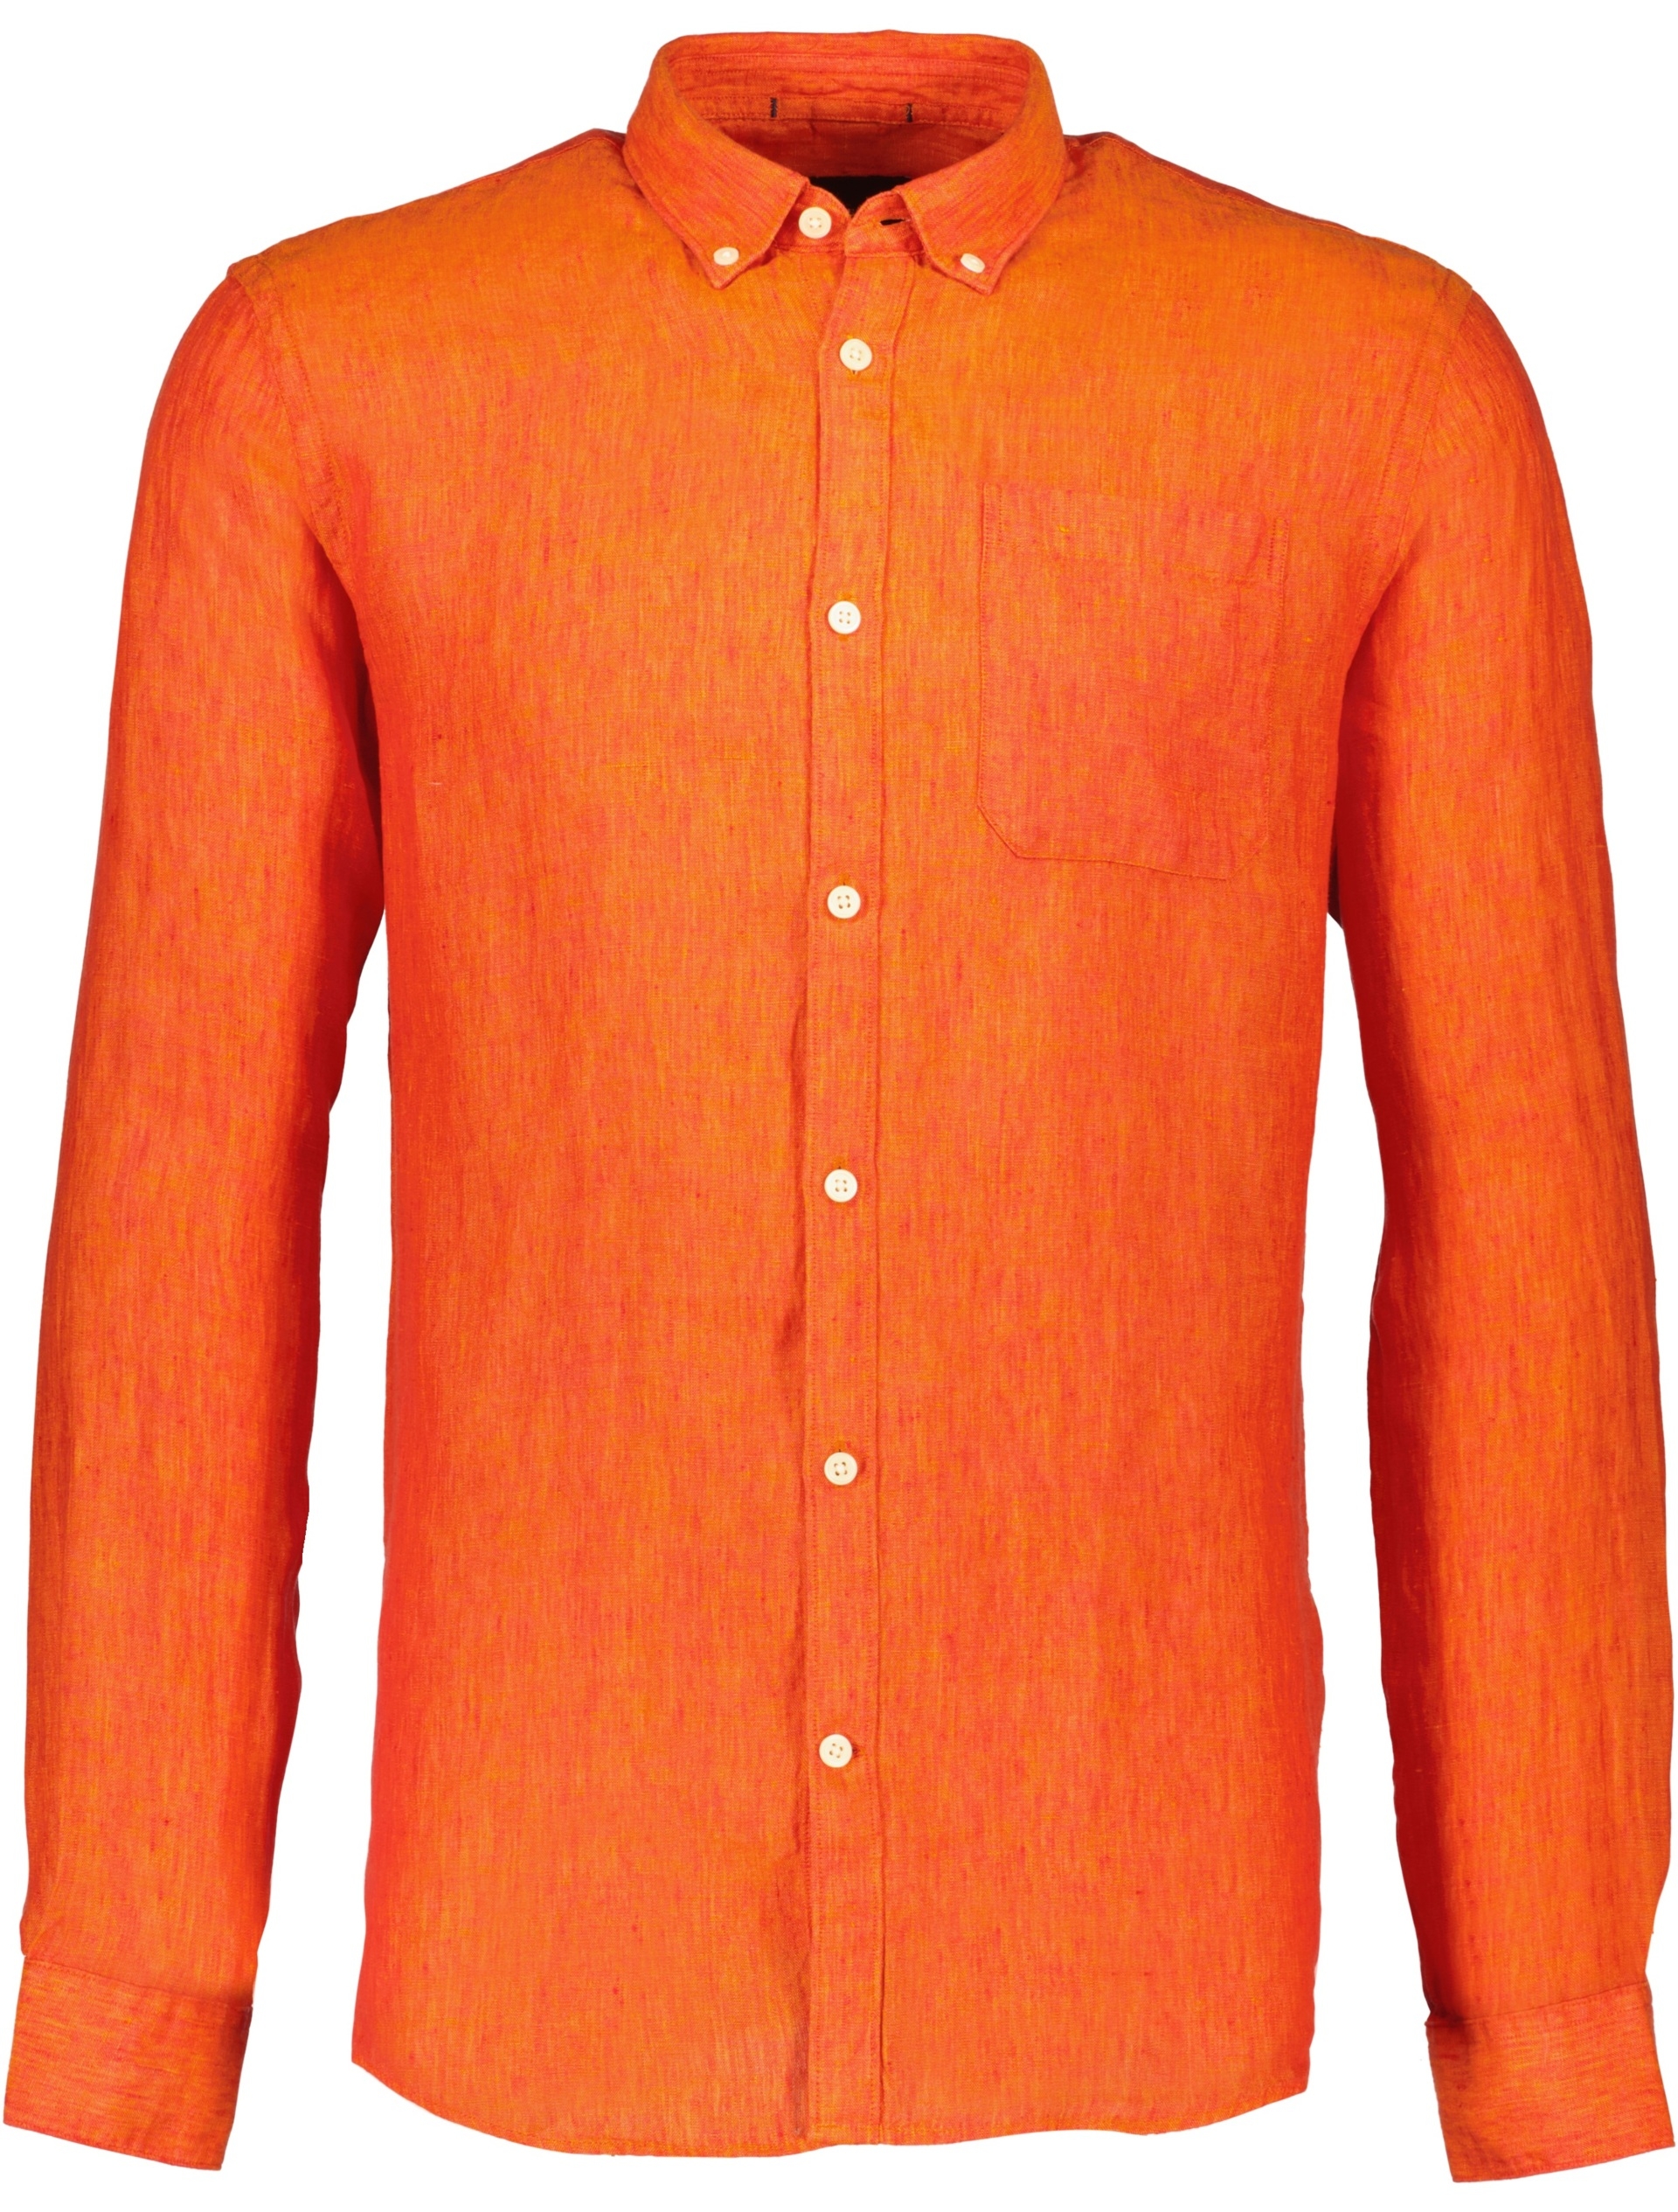 Lindbergh Leinenhemd orange / orange mel